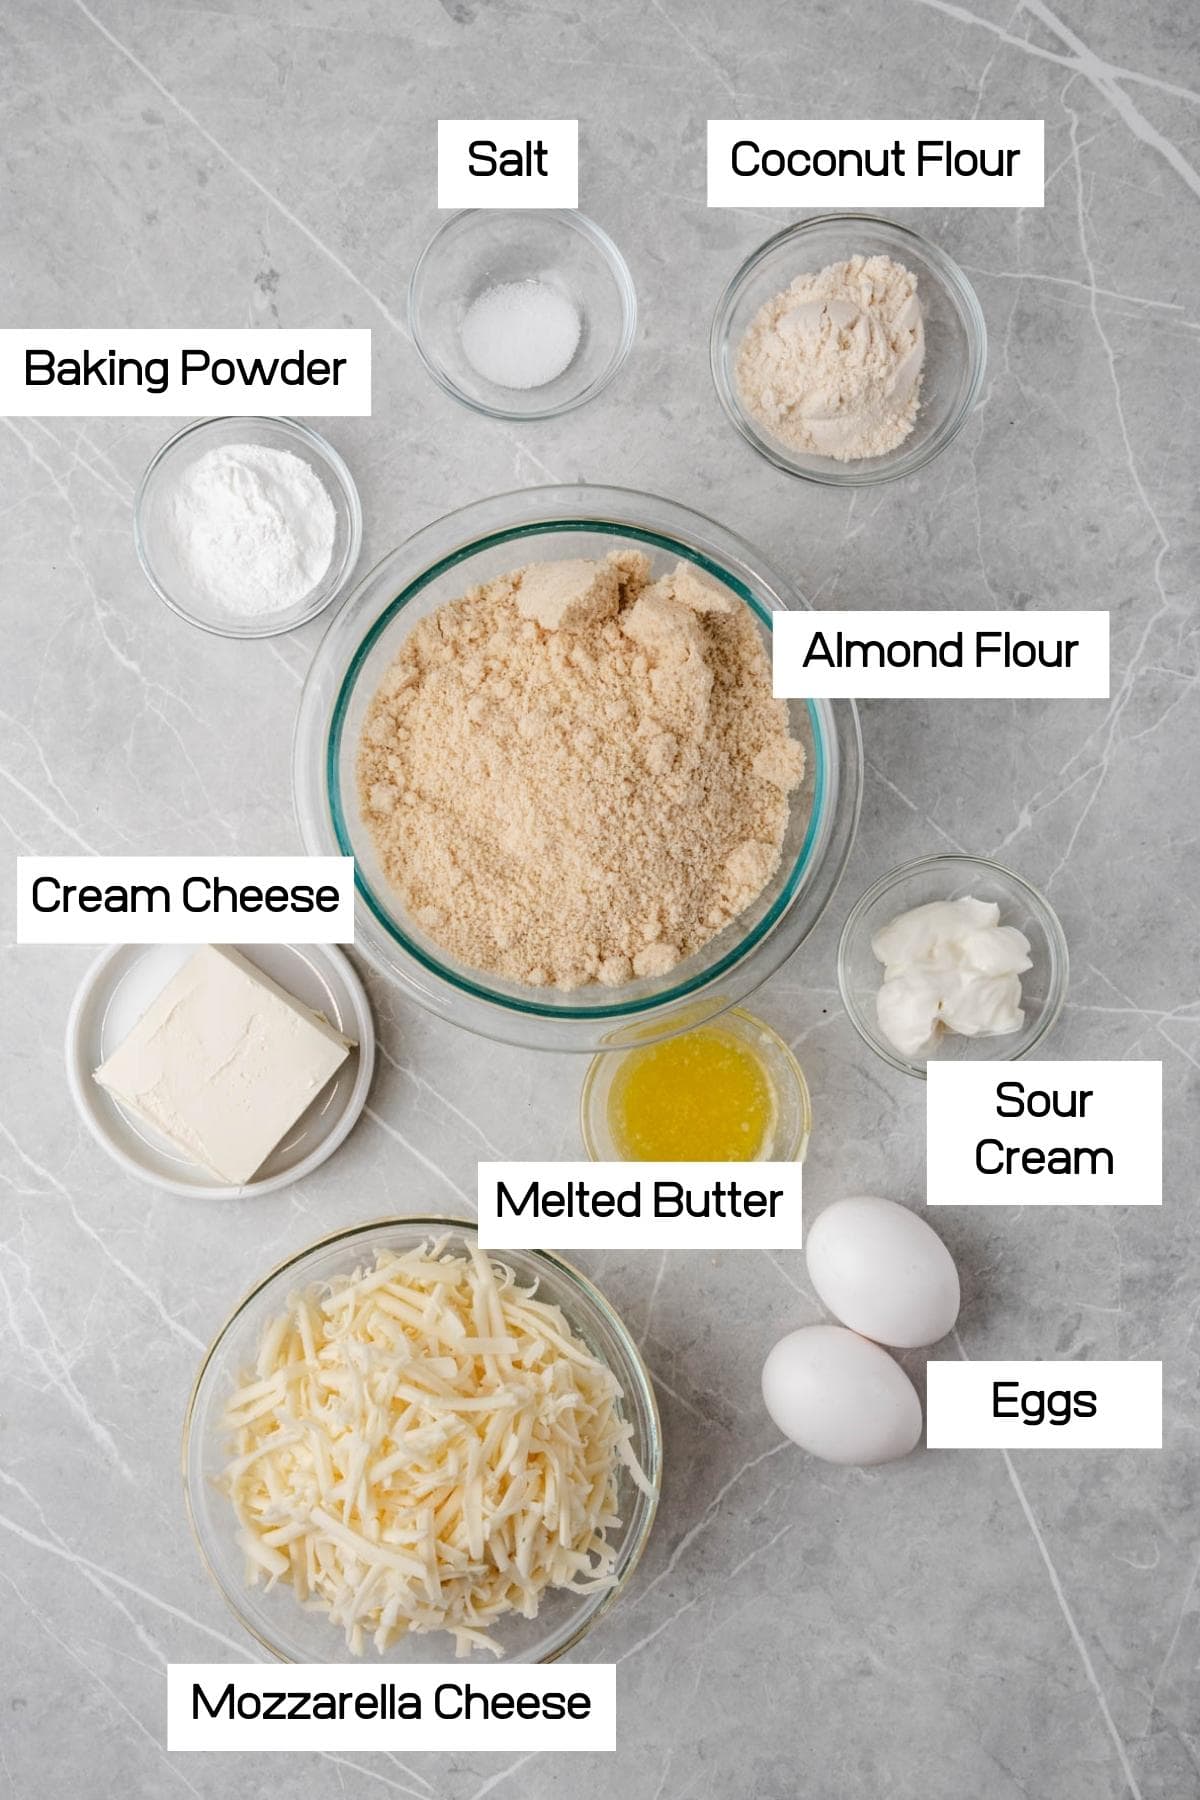 Cream cheese, almond flour and eggs